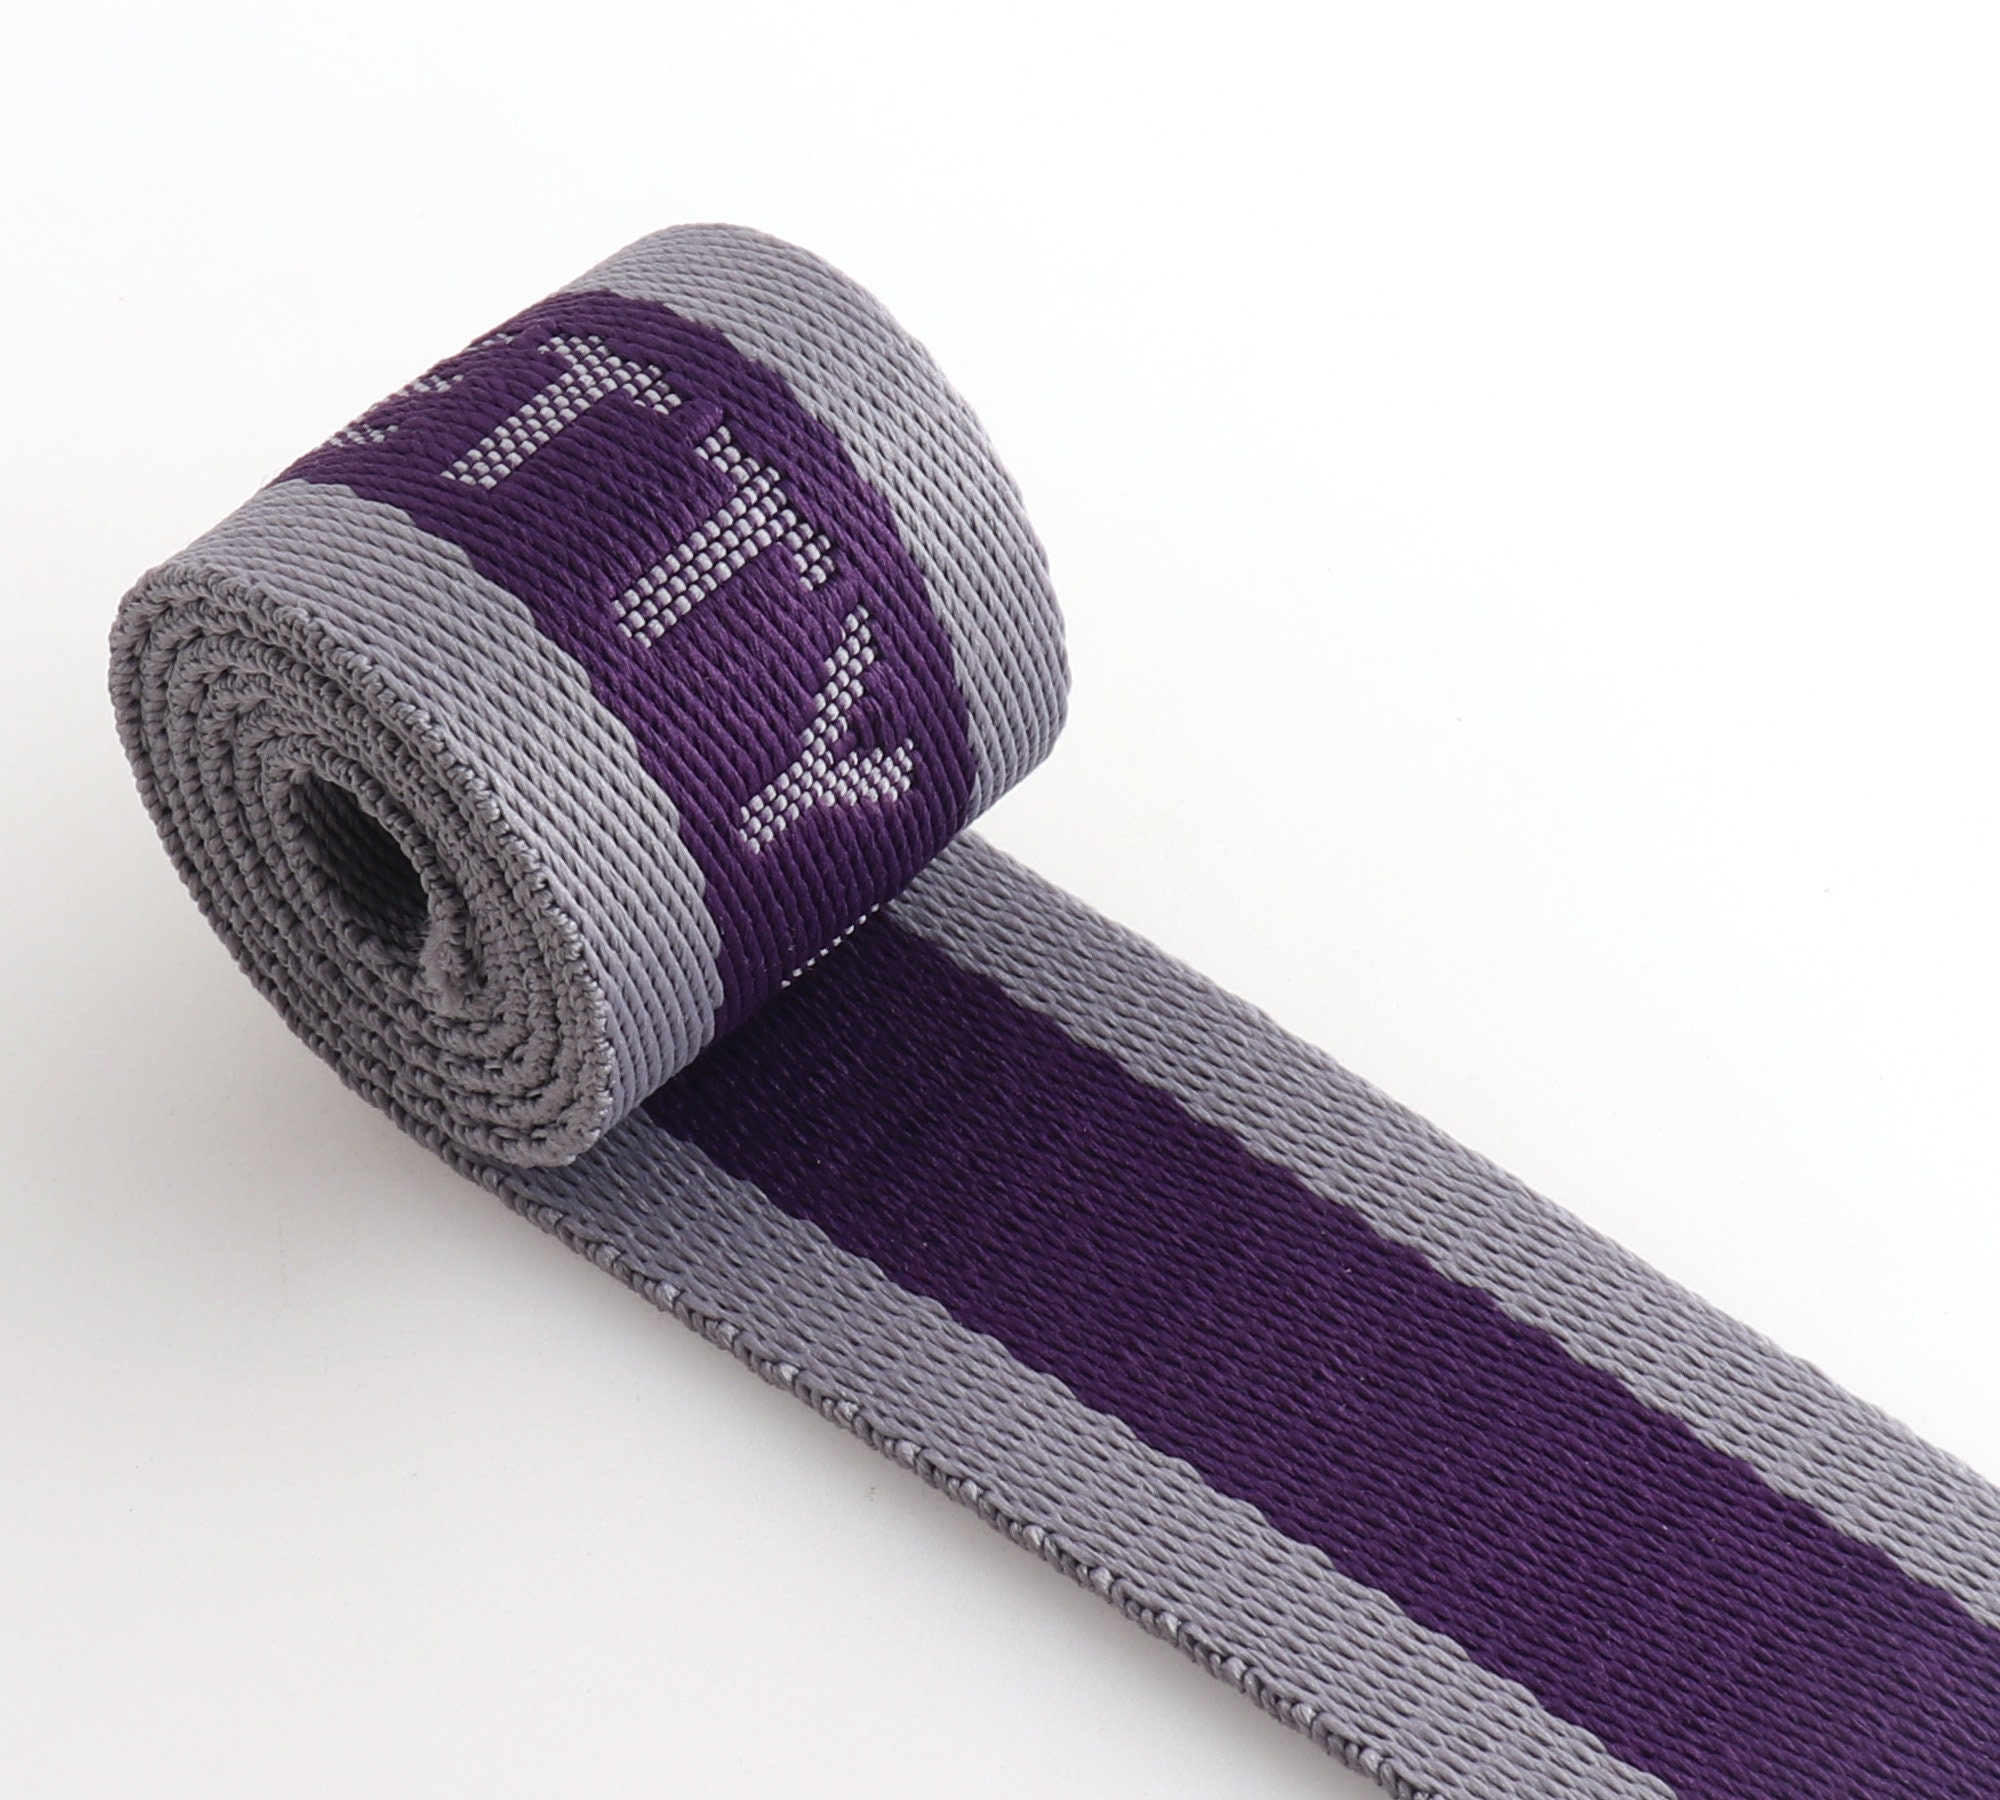 Retail Purple Measurement Tape - Seatbelt Webbing